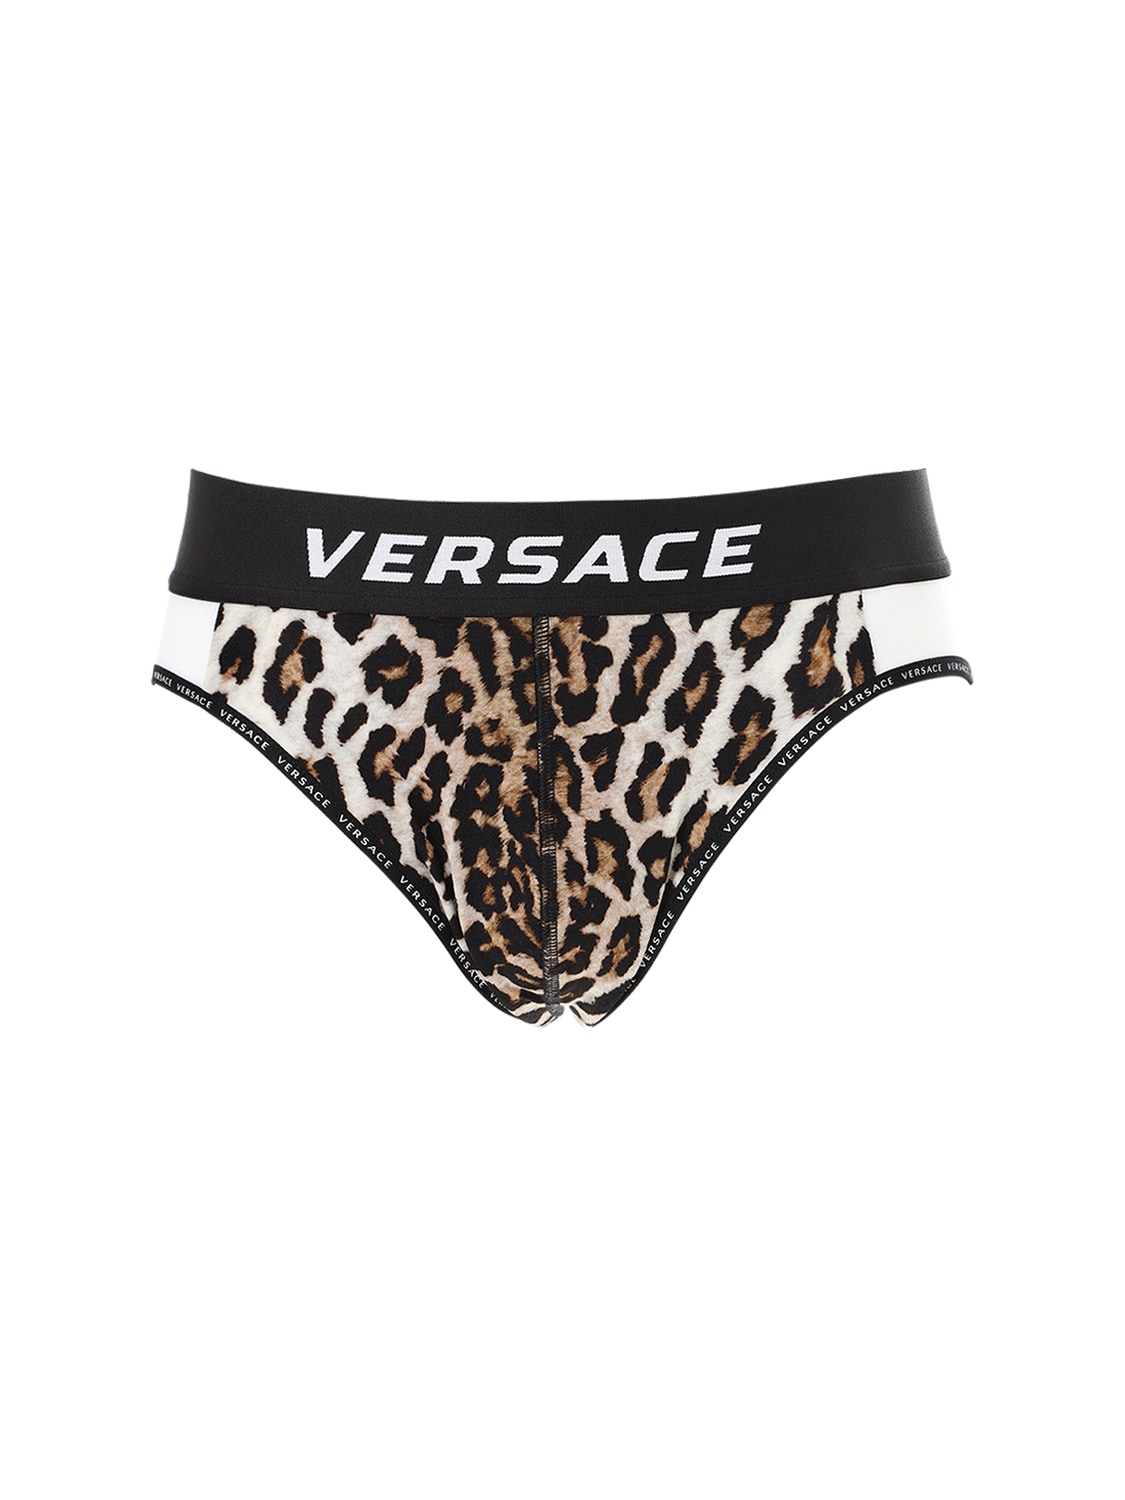 Versace Leopard Print Viscose Briefs